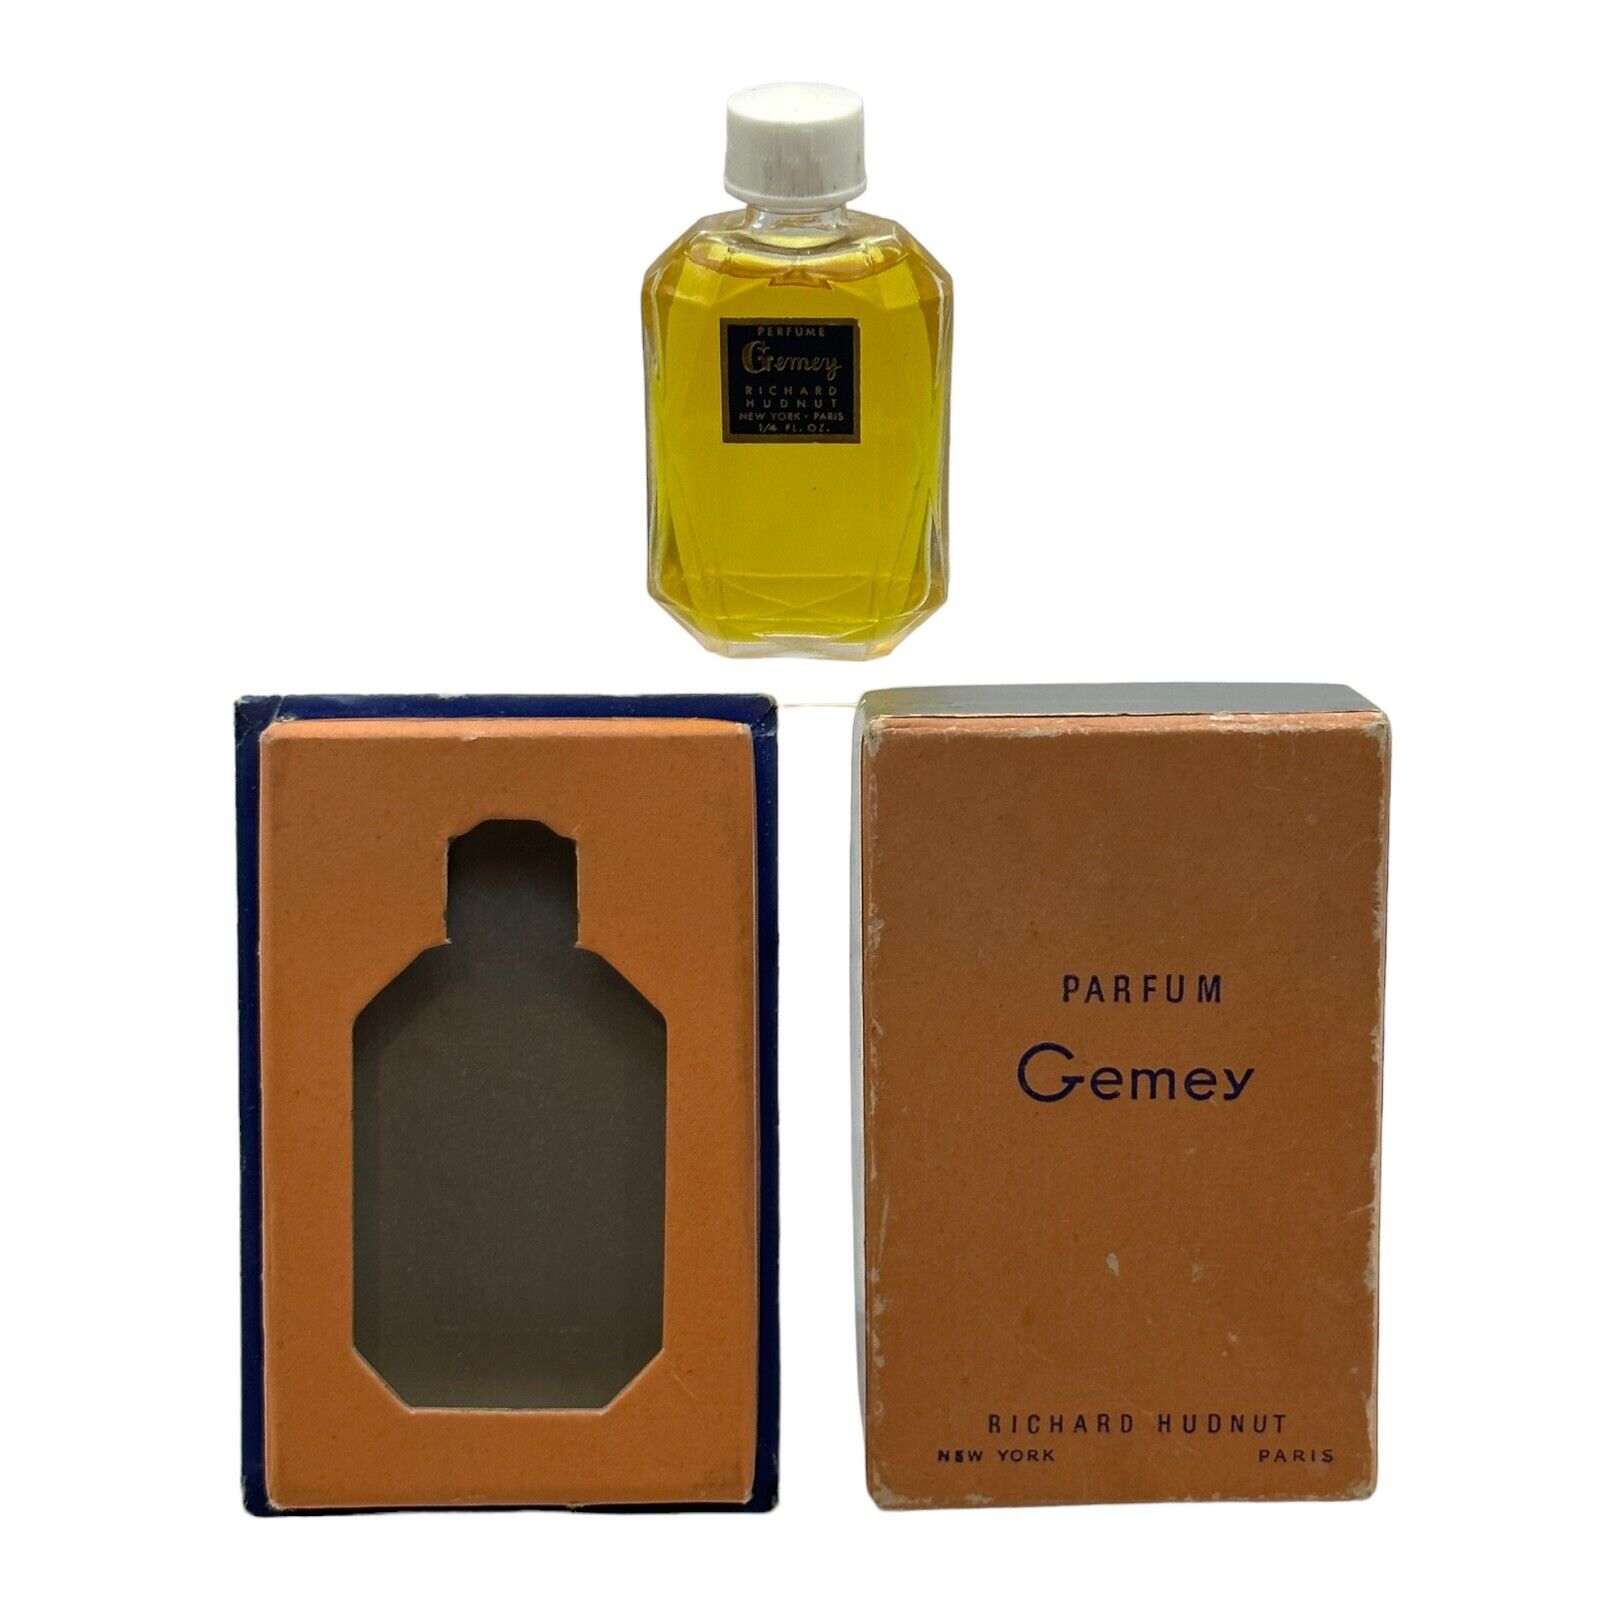 Parfum Gemey Richard Hudnut Boxed Miniature Parfum 0.25 fl. oz Perfume Vintage